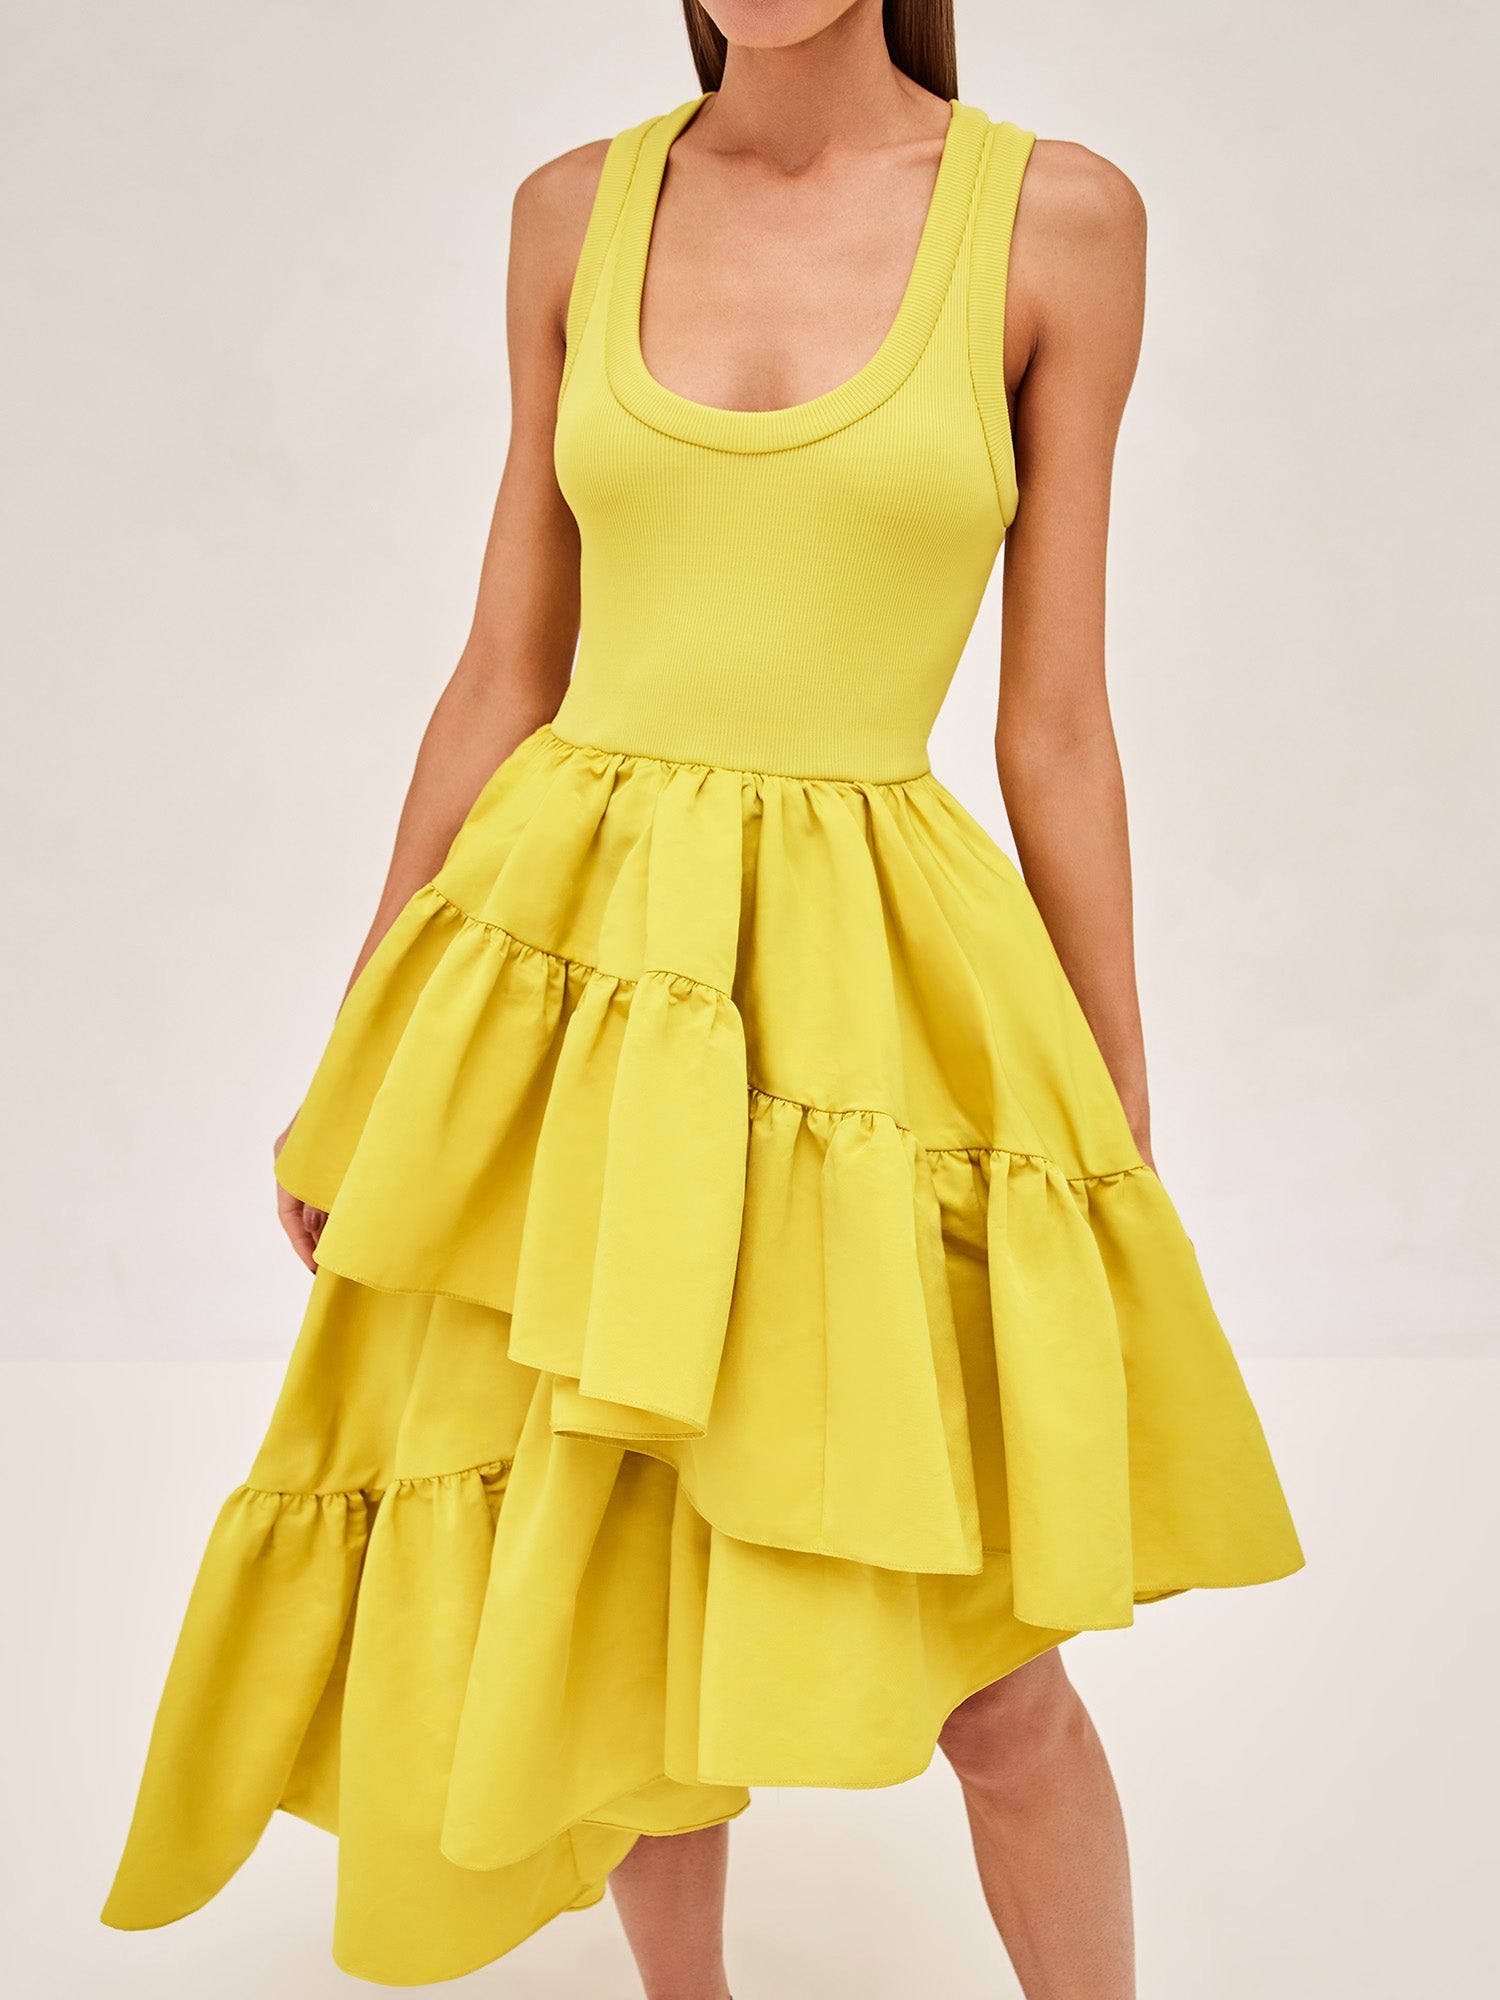 Alexis Amadea sleeve dress in yellow